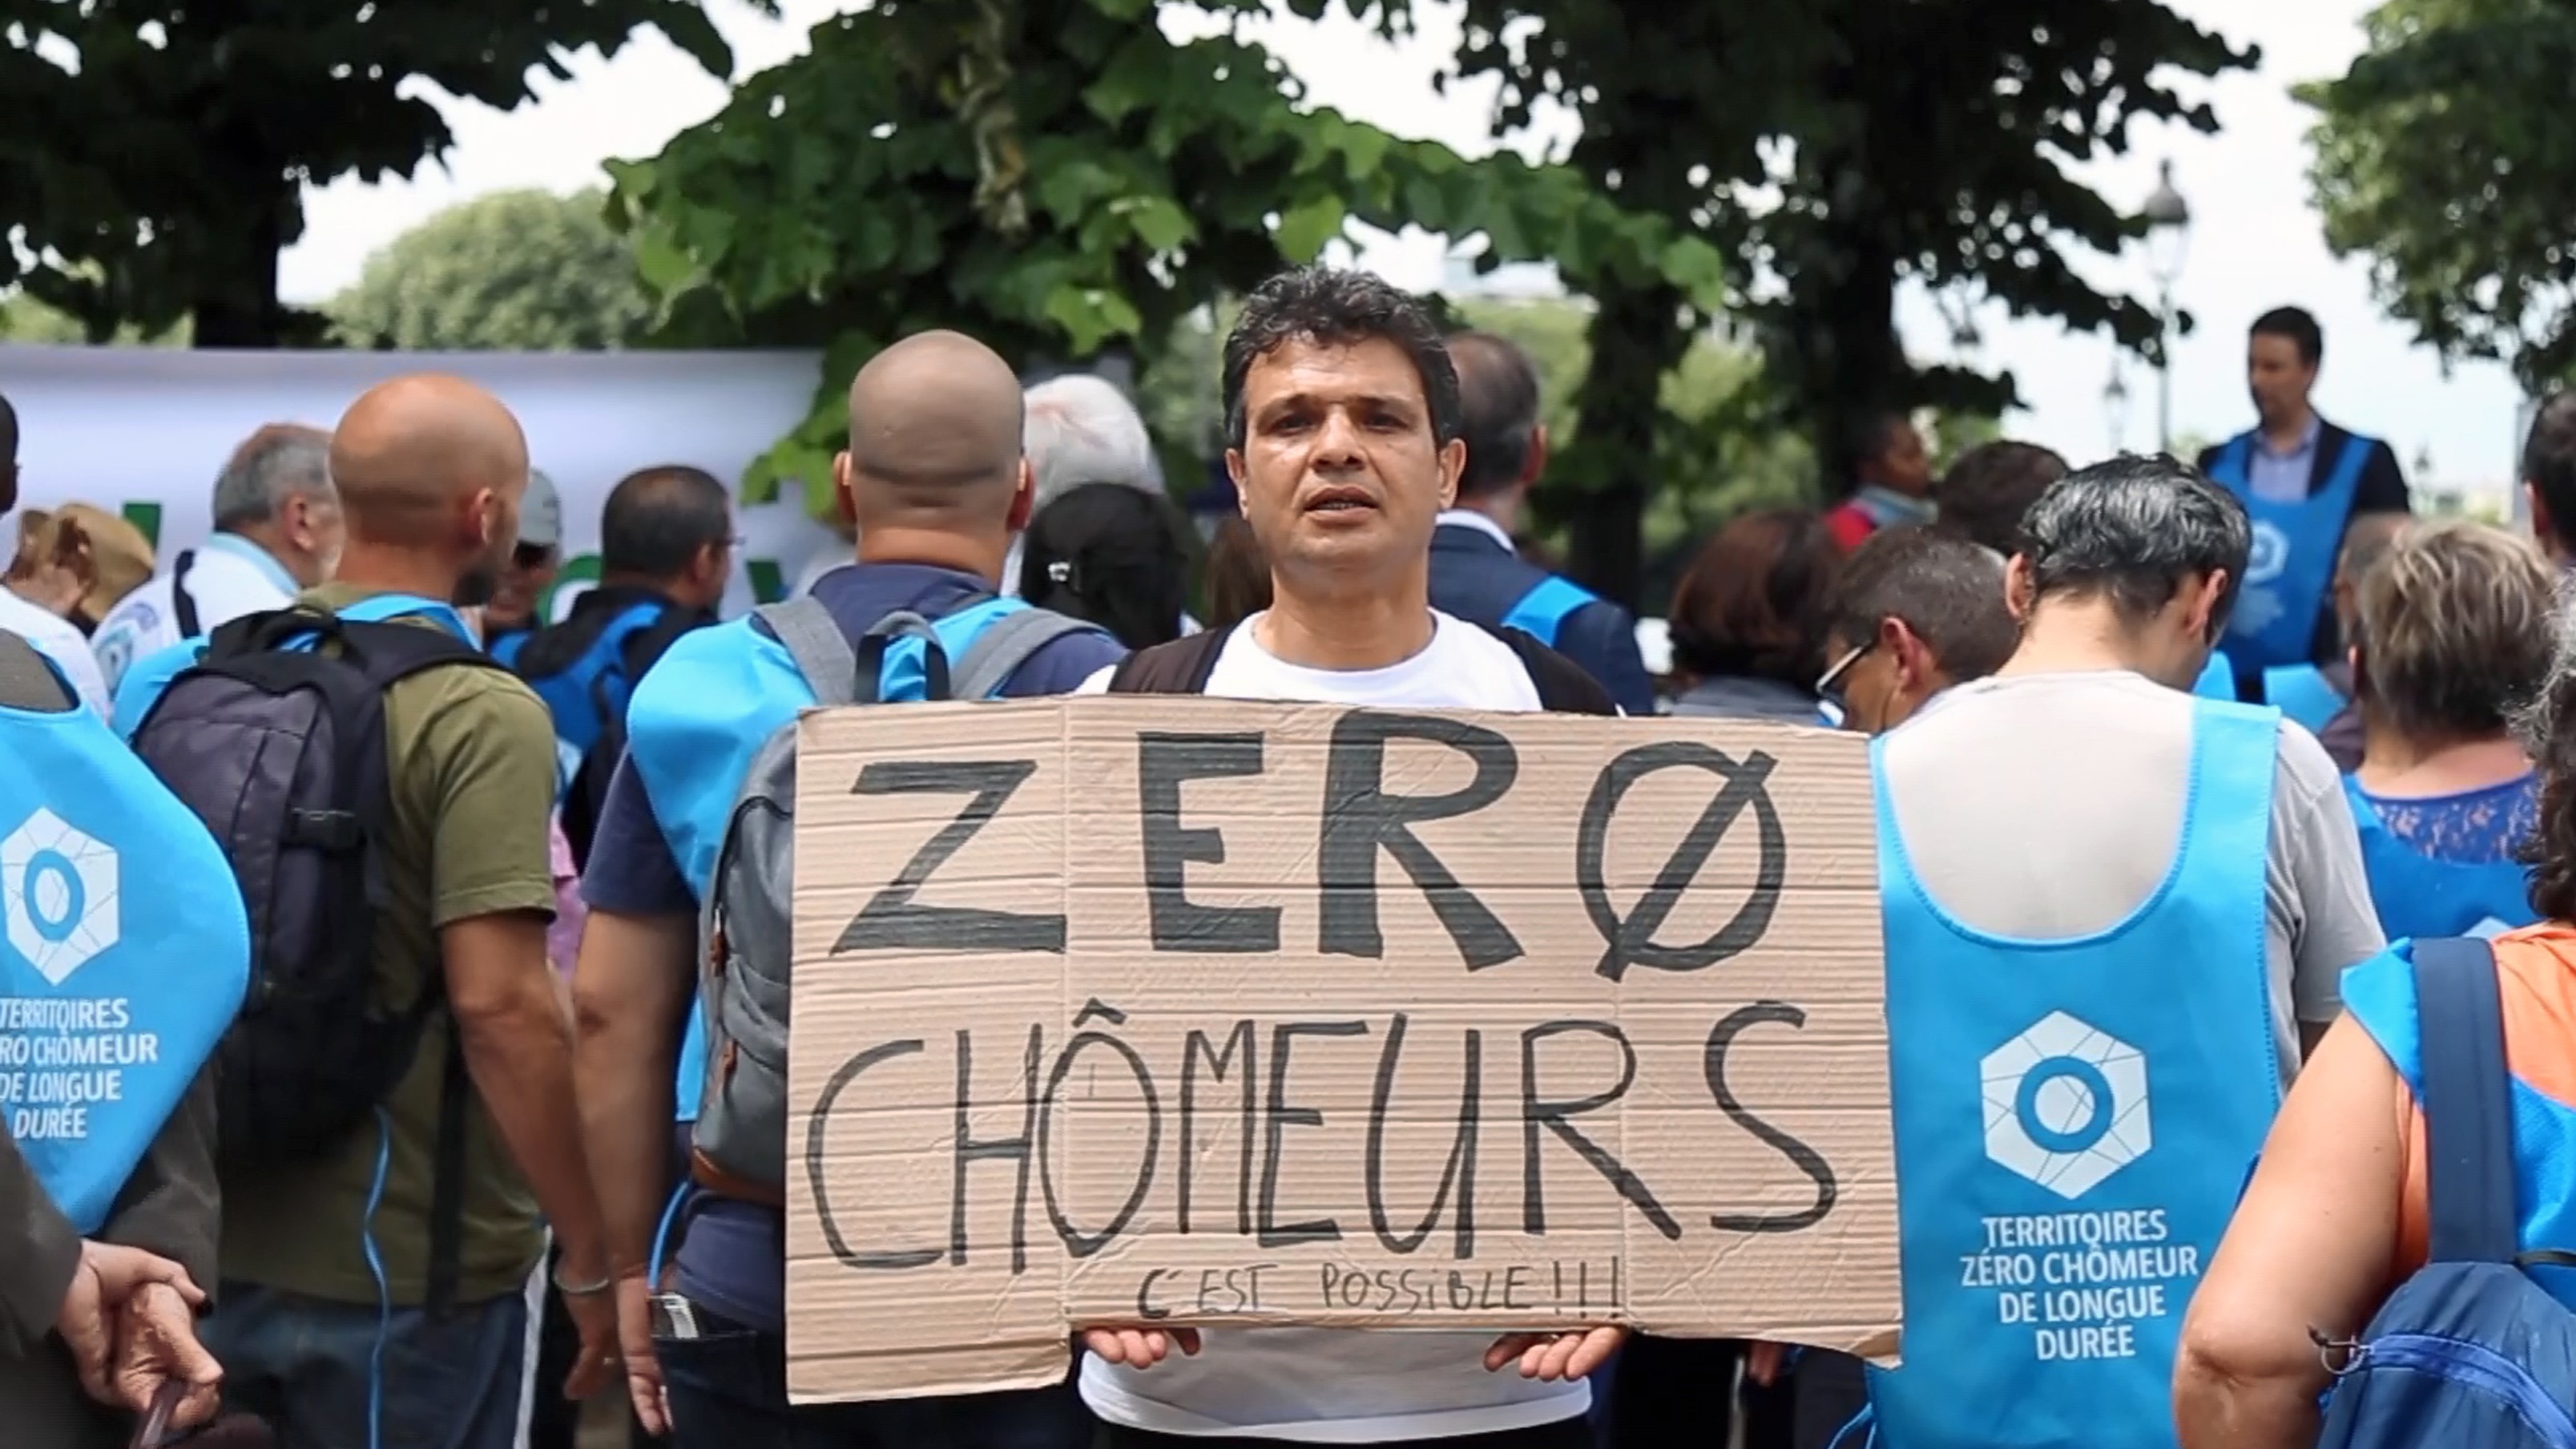 A man showing a message calling for zero long-term unemployment